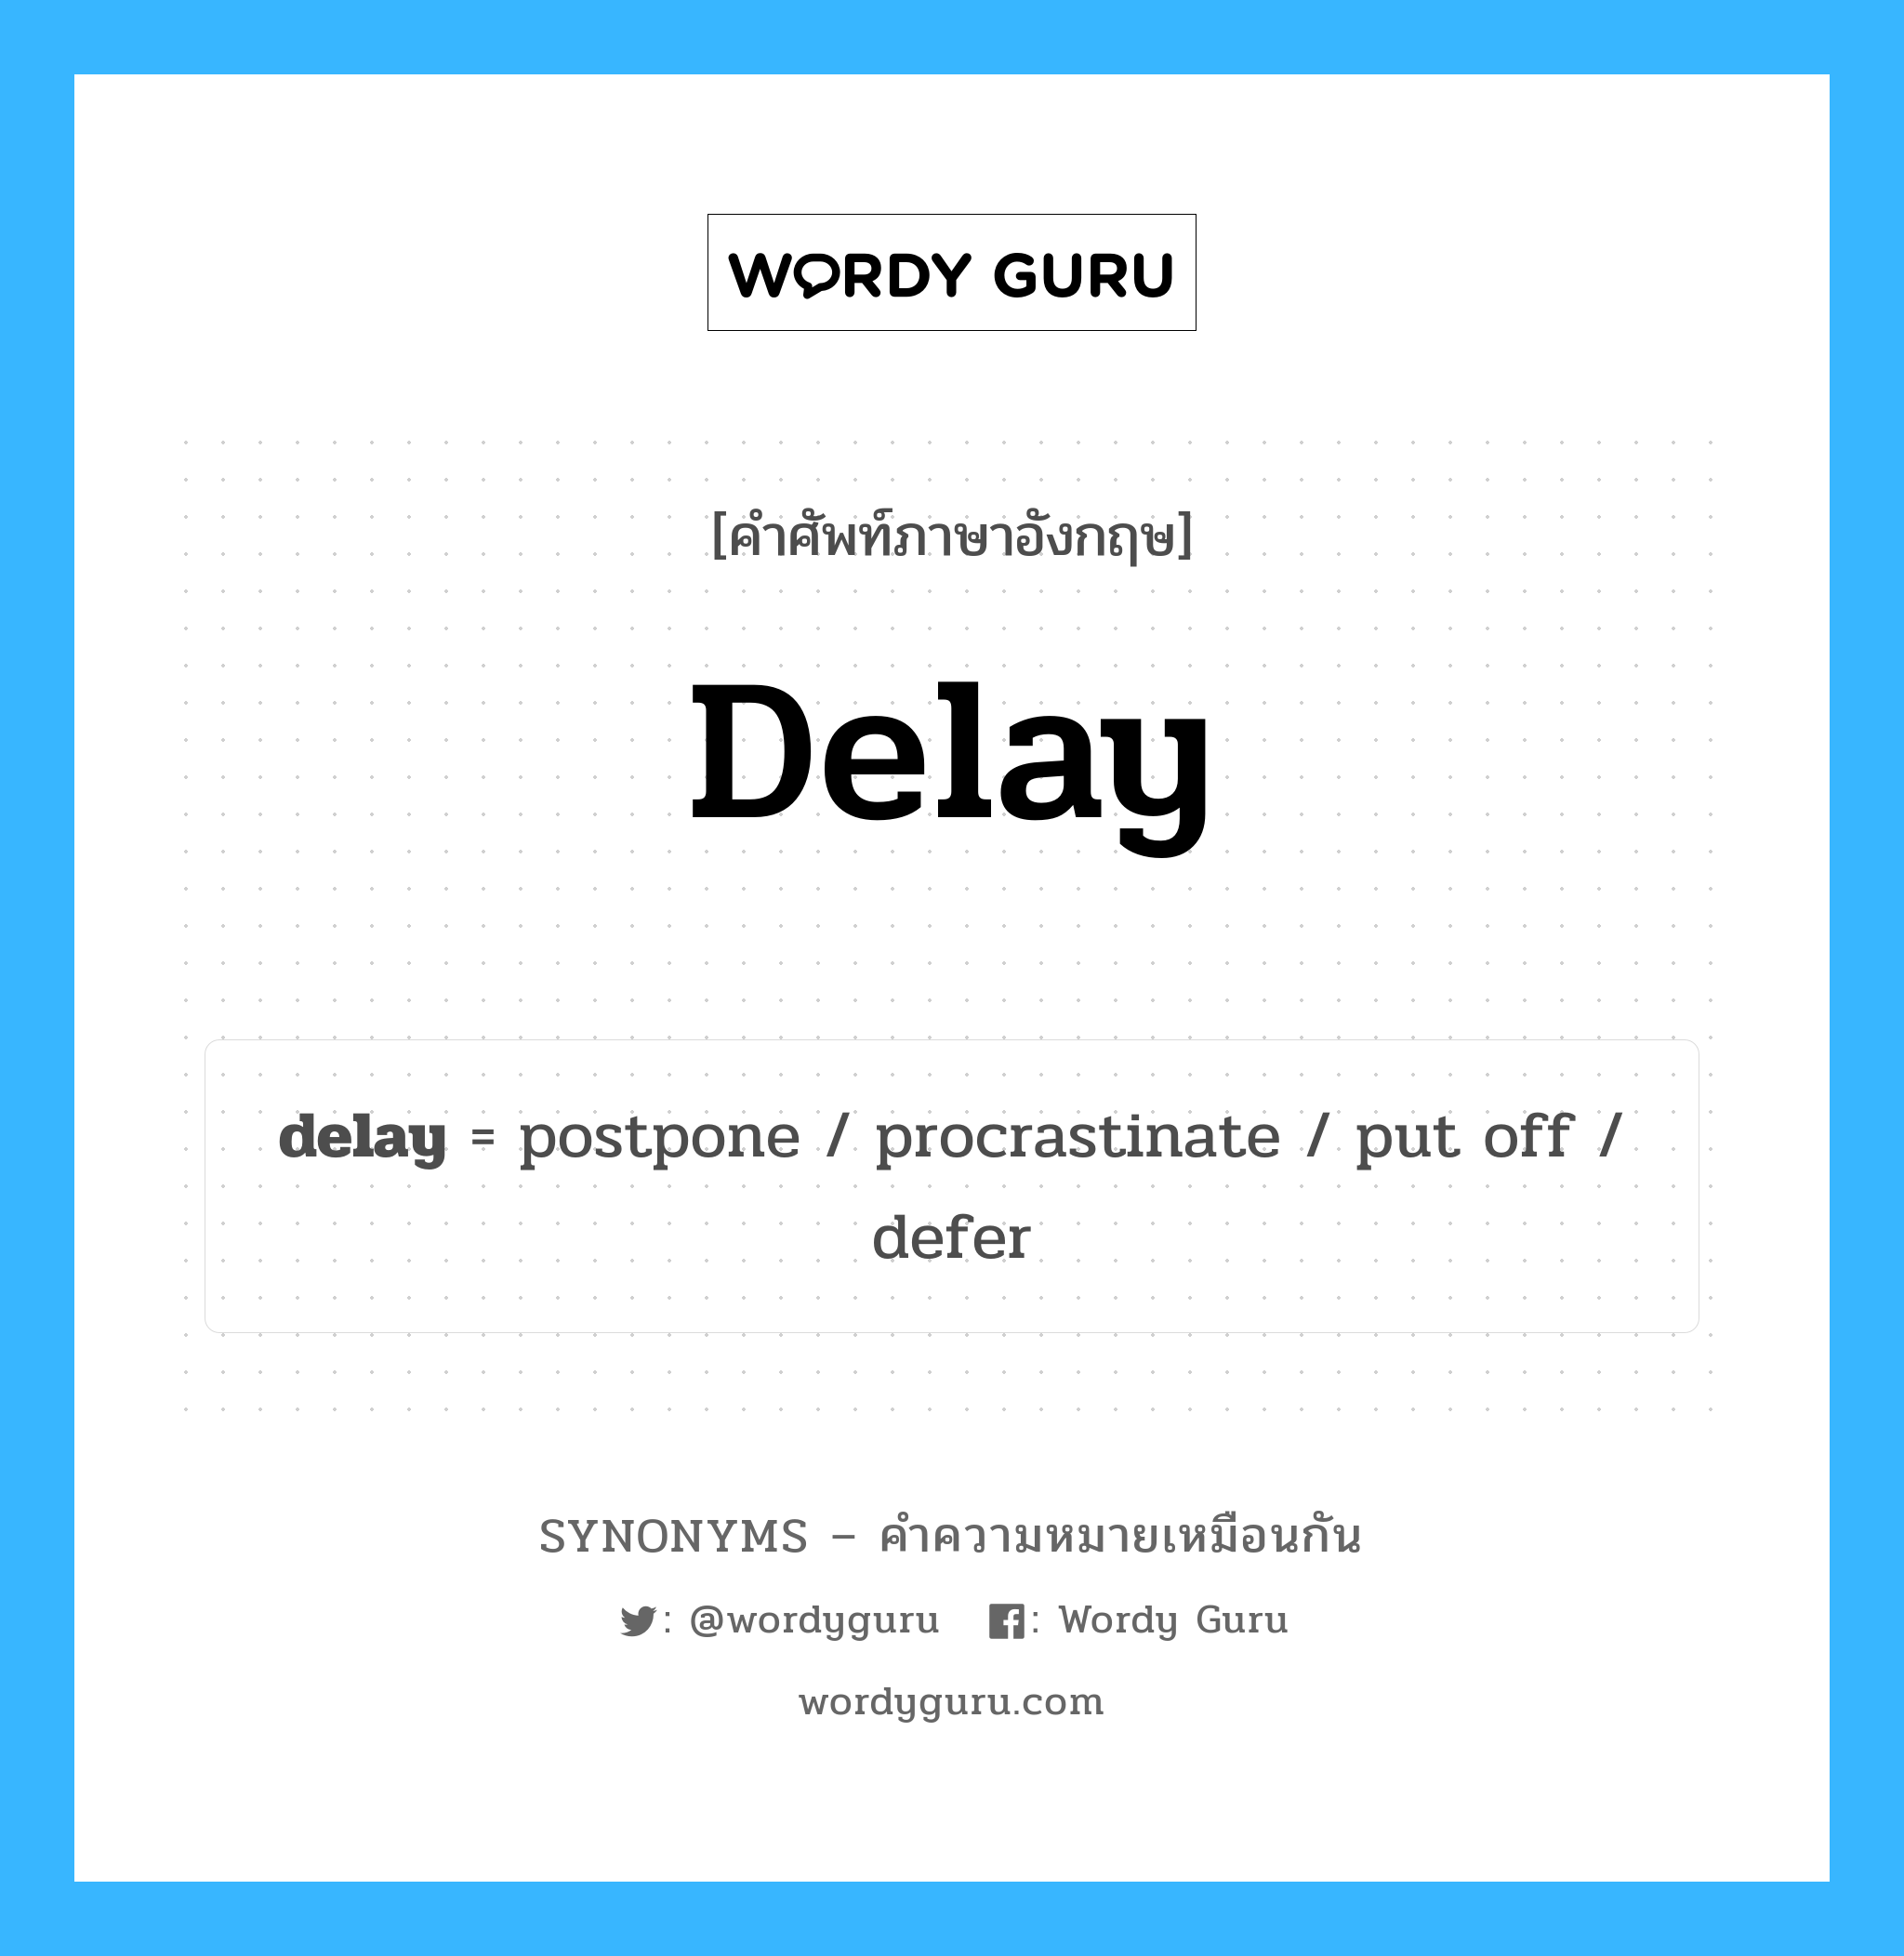 procrastinate เป็นหนึ่งใน delay และมีคำอื่น ๆ อีกดังนี้, คำศัพท์ภาษาอังกฤษ procrastinate ความหมายคล้ายกันกับ delay แปลว่า เลื่อน หมวด delay